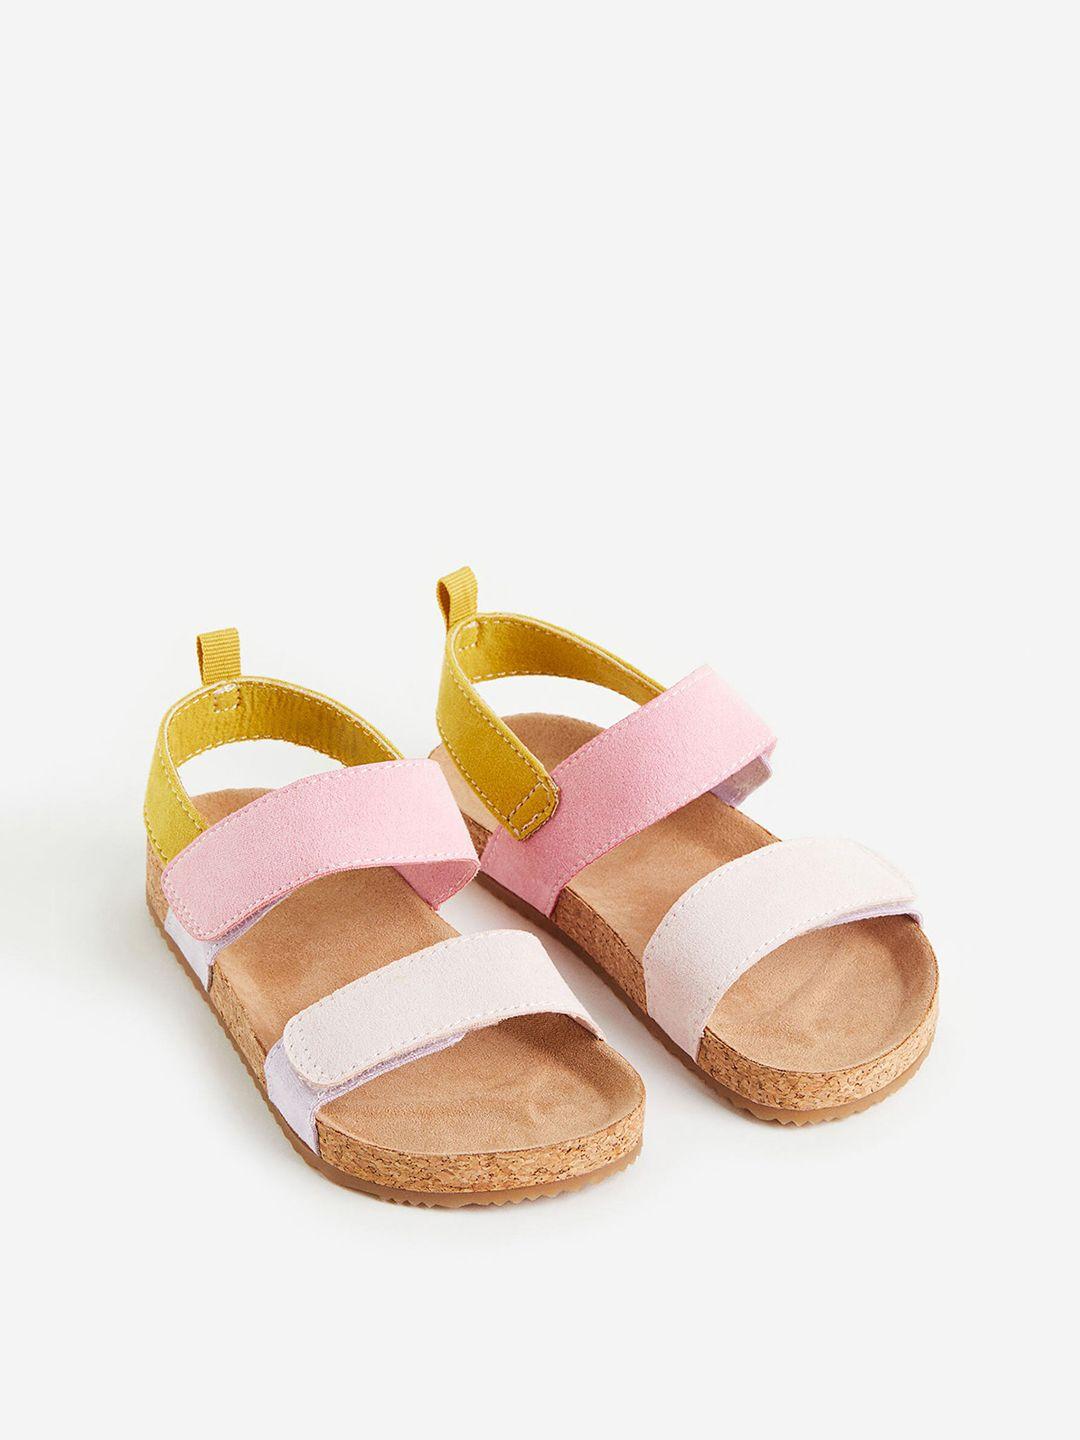 h&m girls sandals